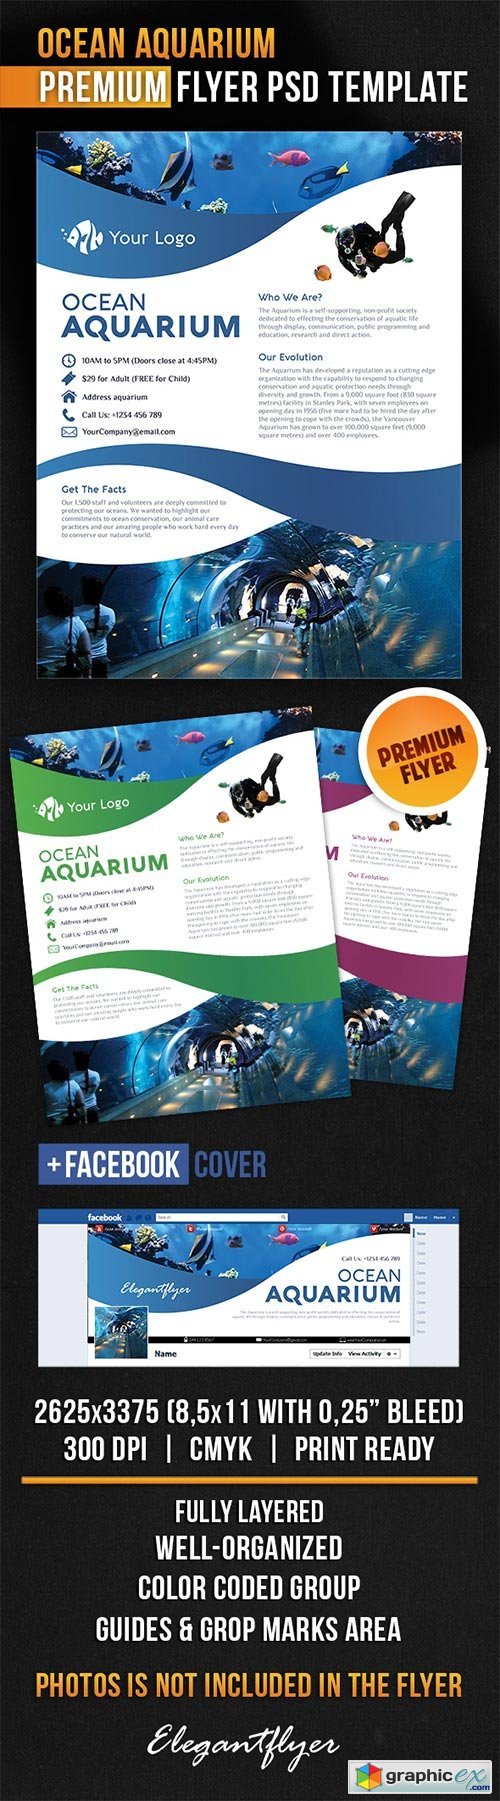 Ocean Aquarium Flyer PSD Template + Facebook Cover